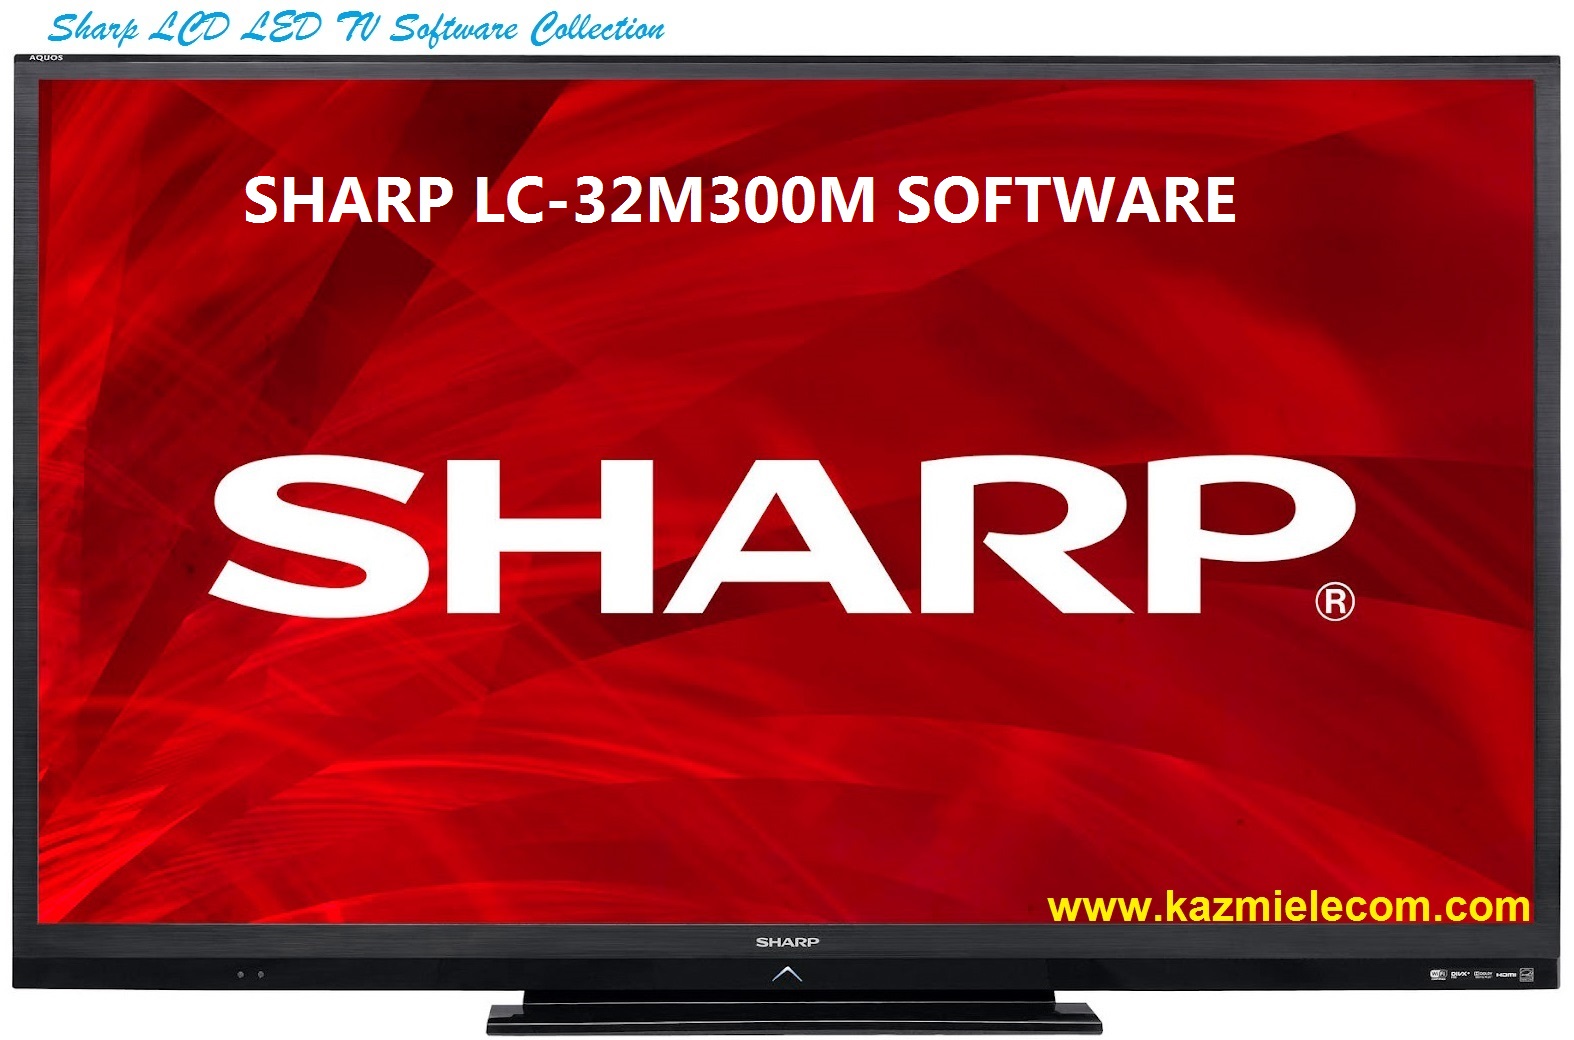 Sharp Lc-32M300M